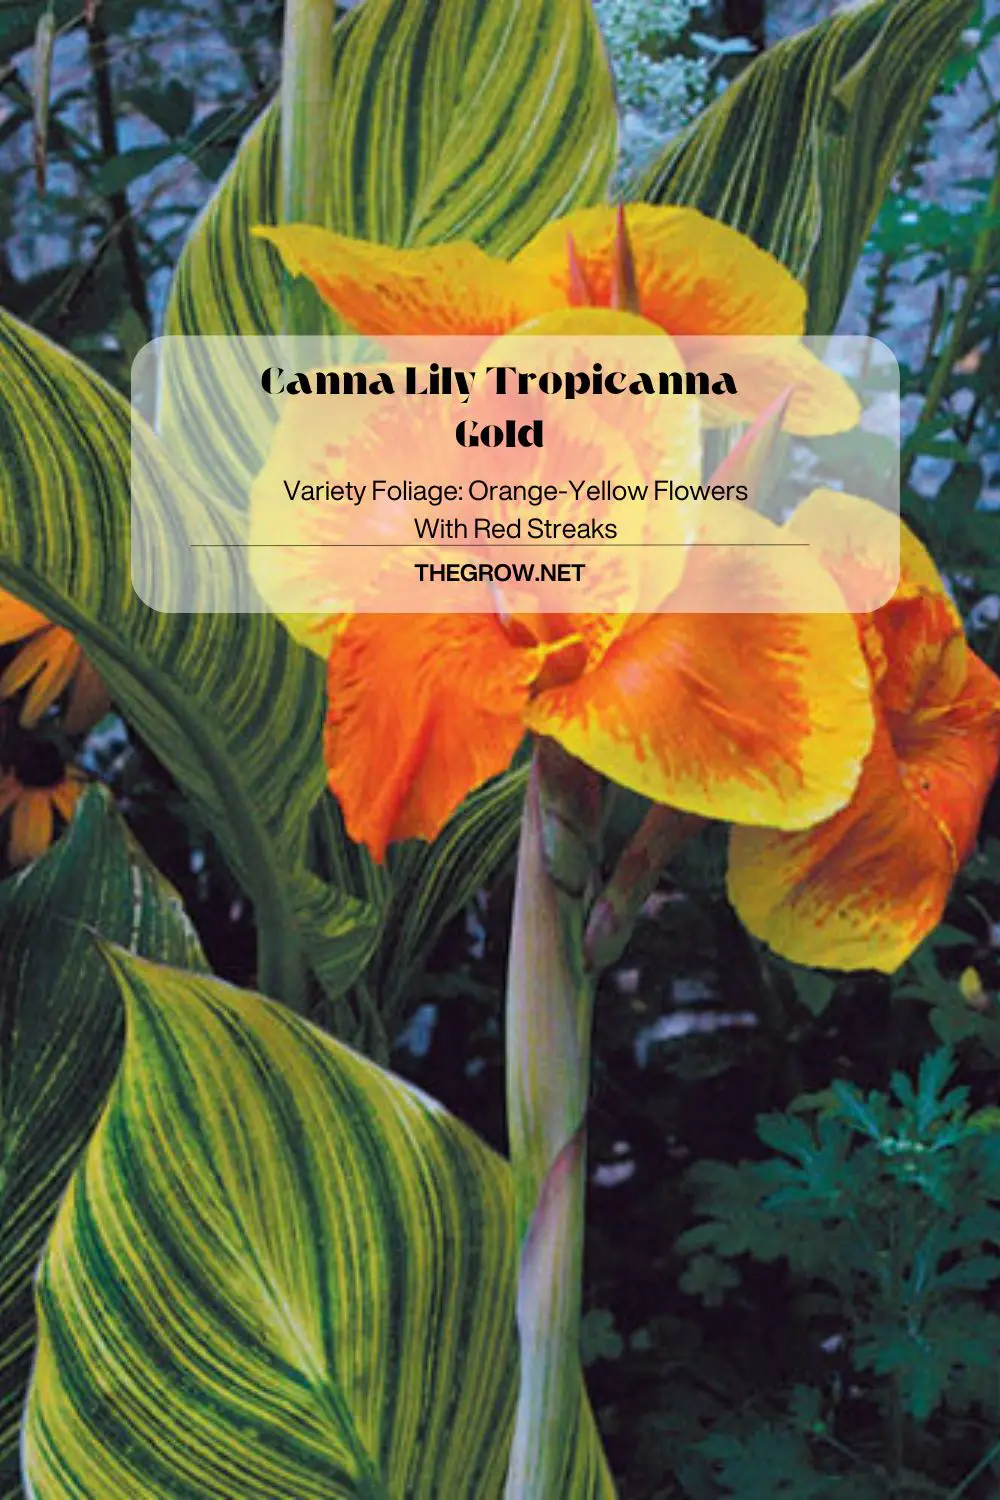 Canna Lily Tropicanna Gold